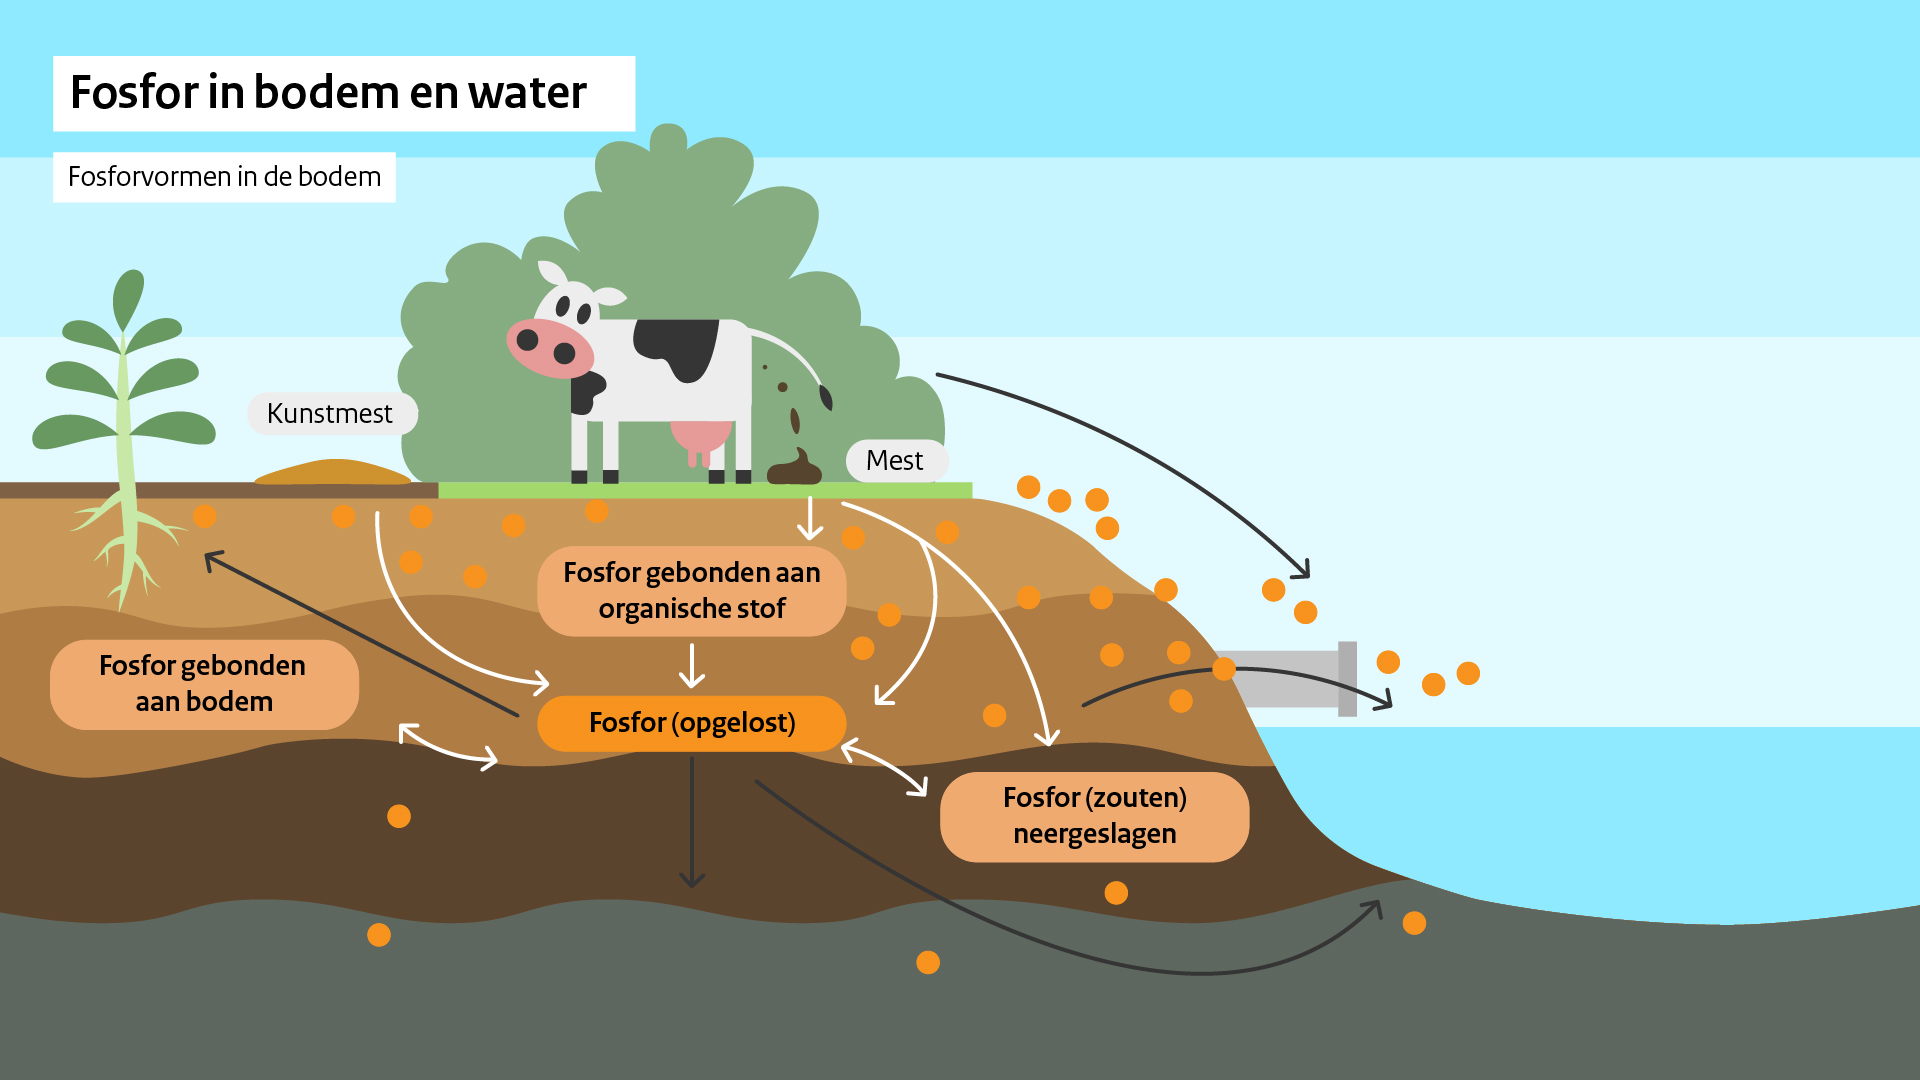 Fosfor in bodem en water